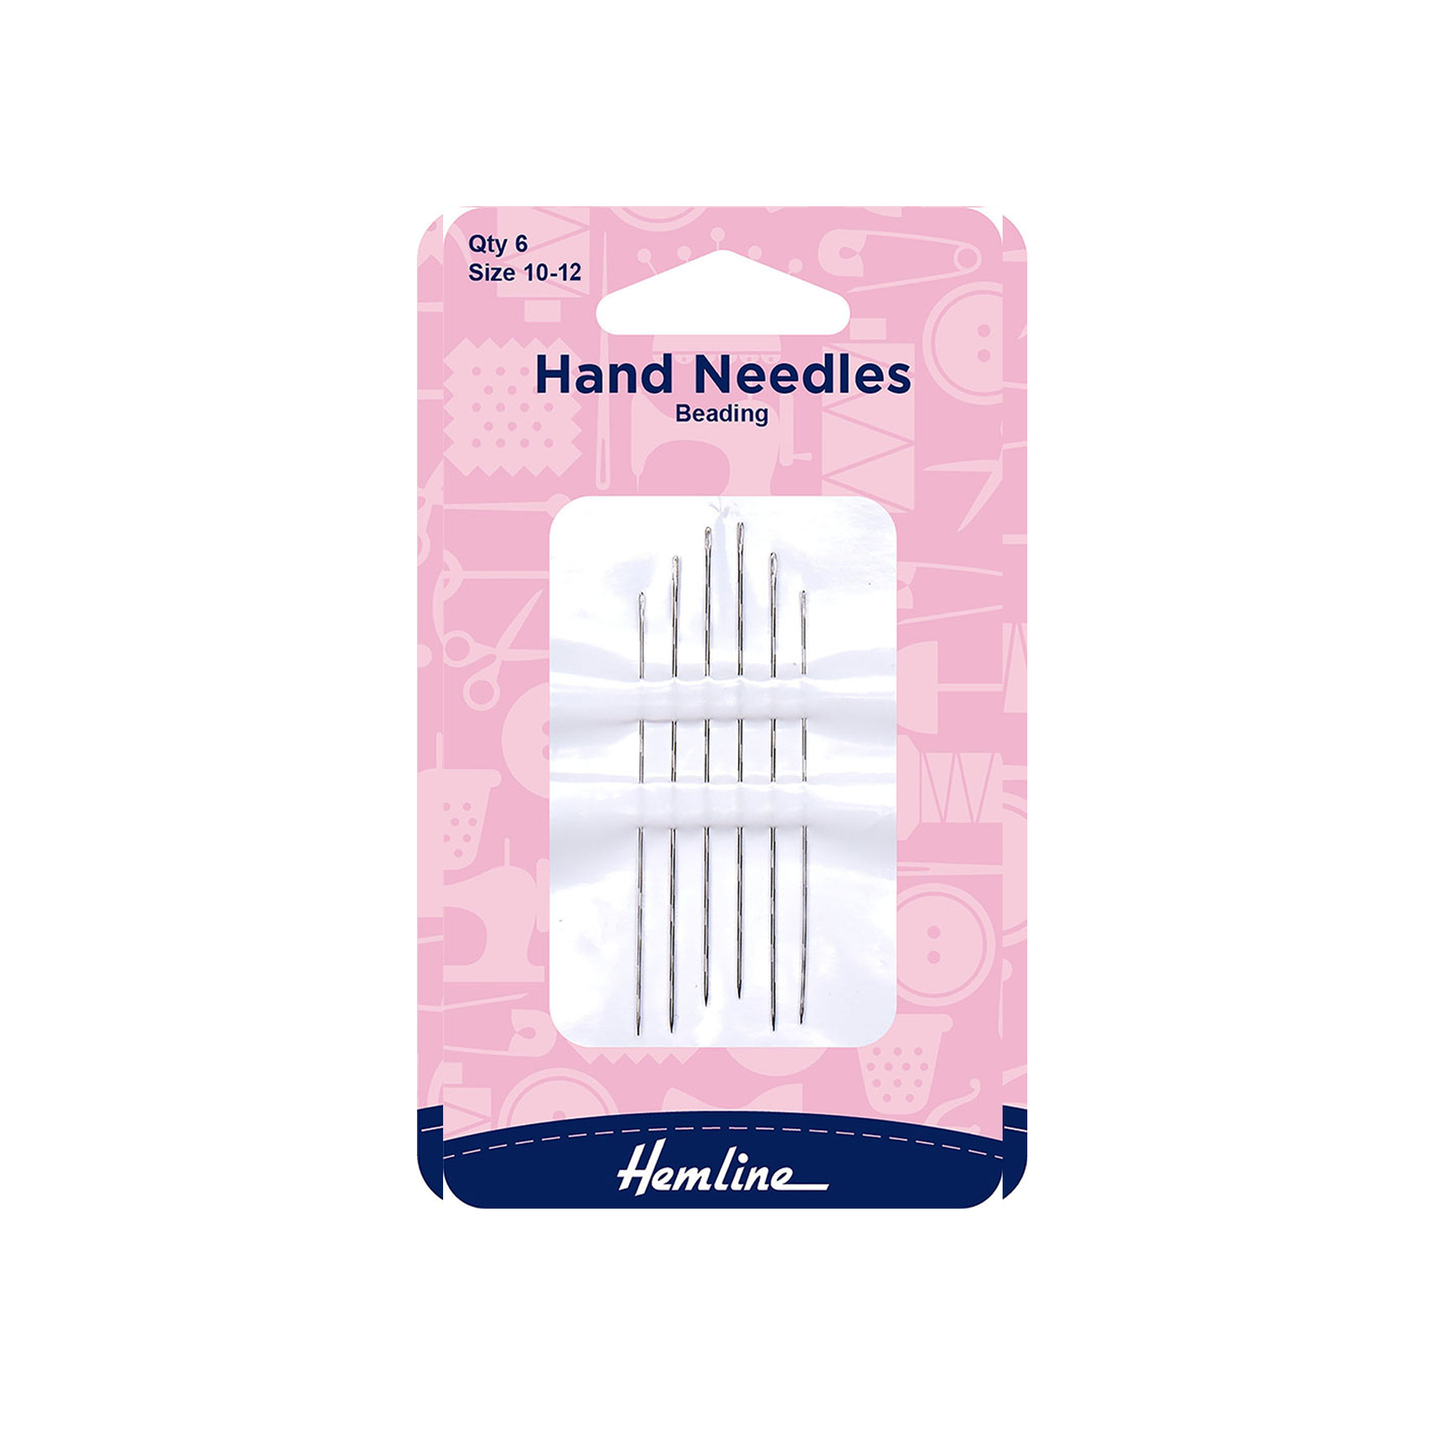 Hemline Hand Needles